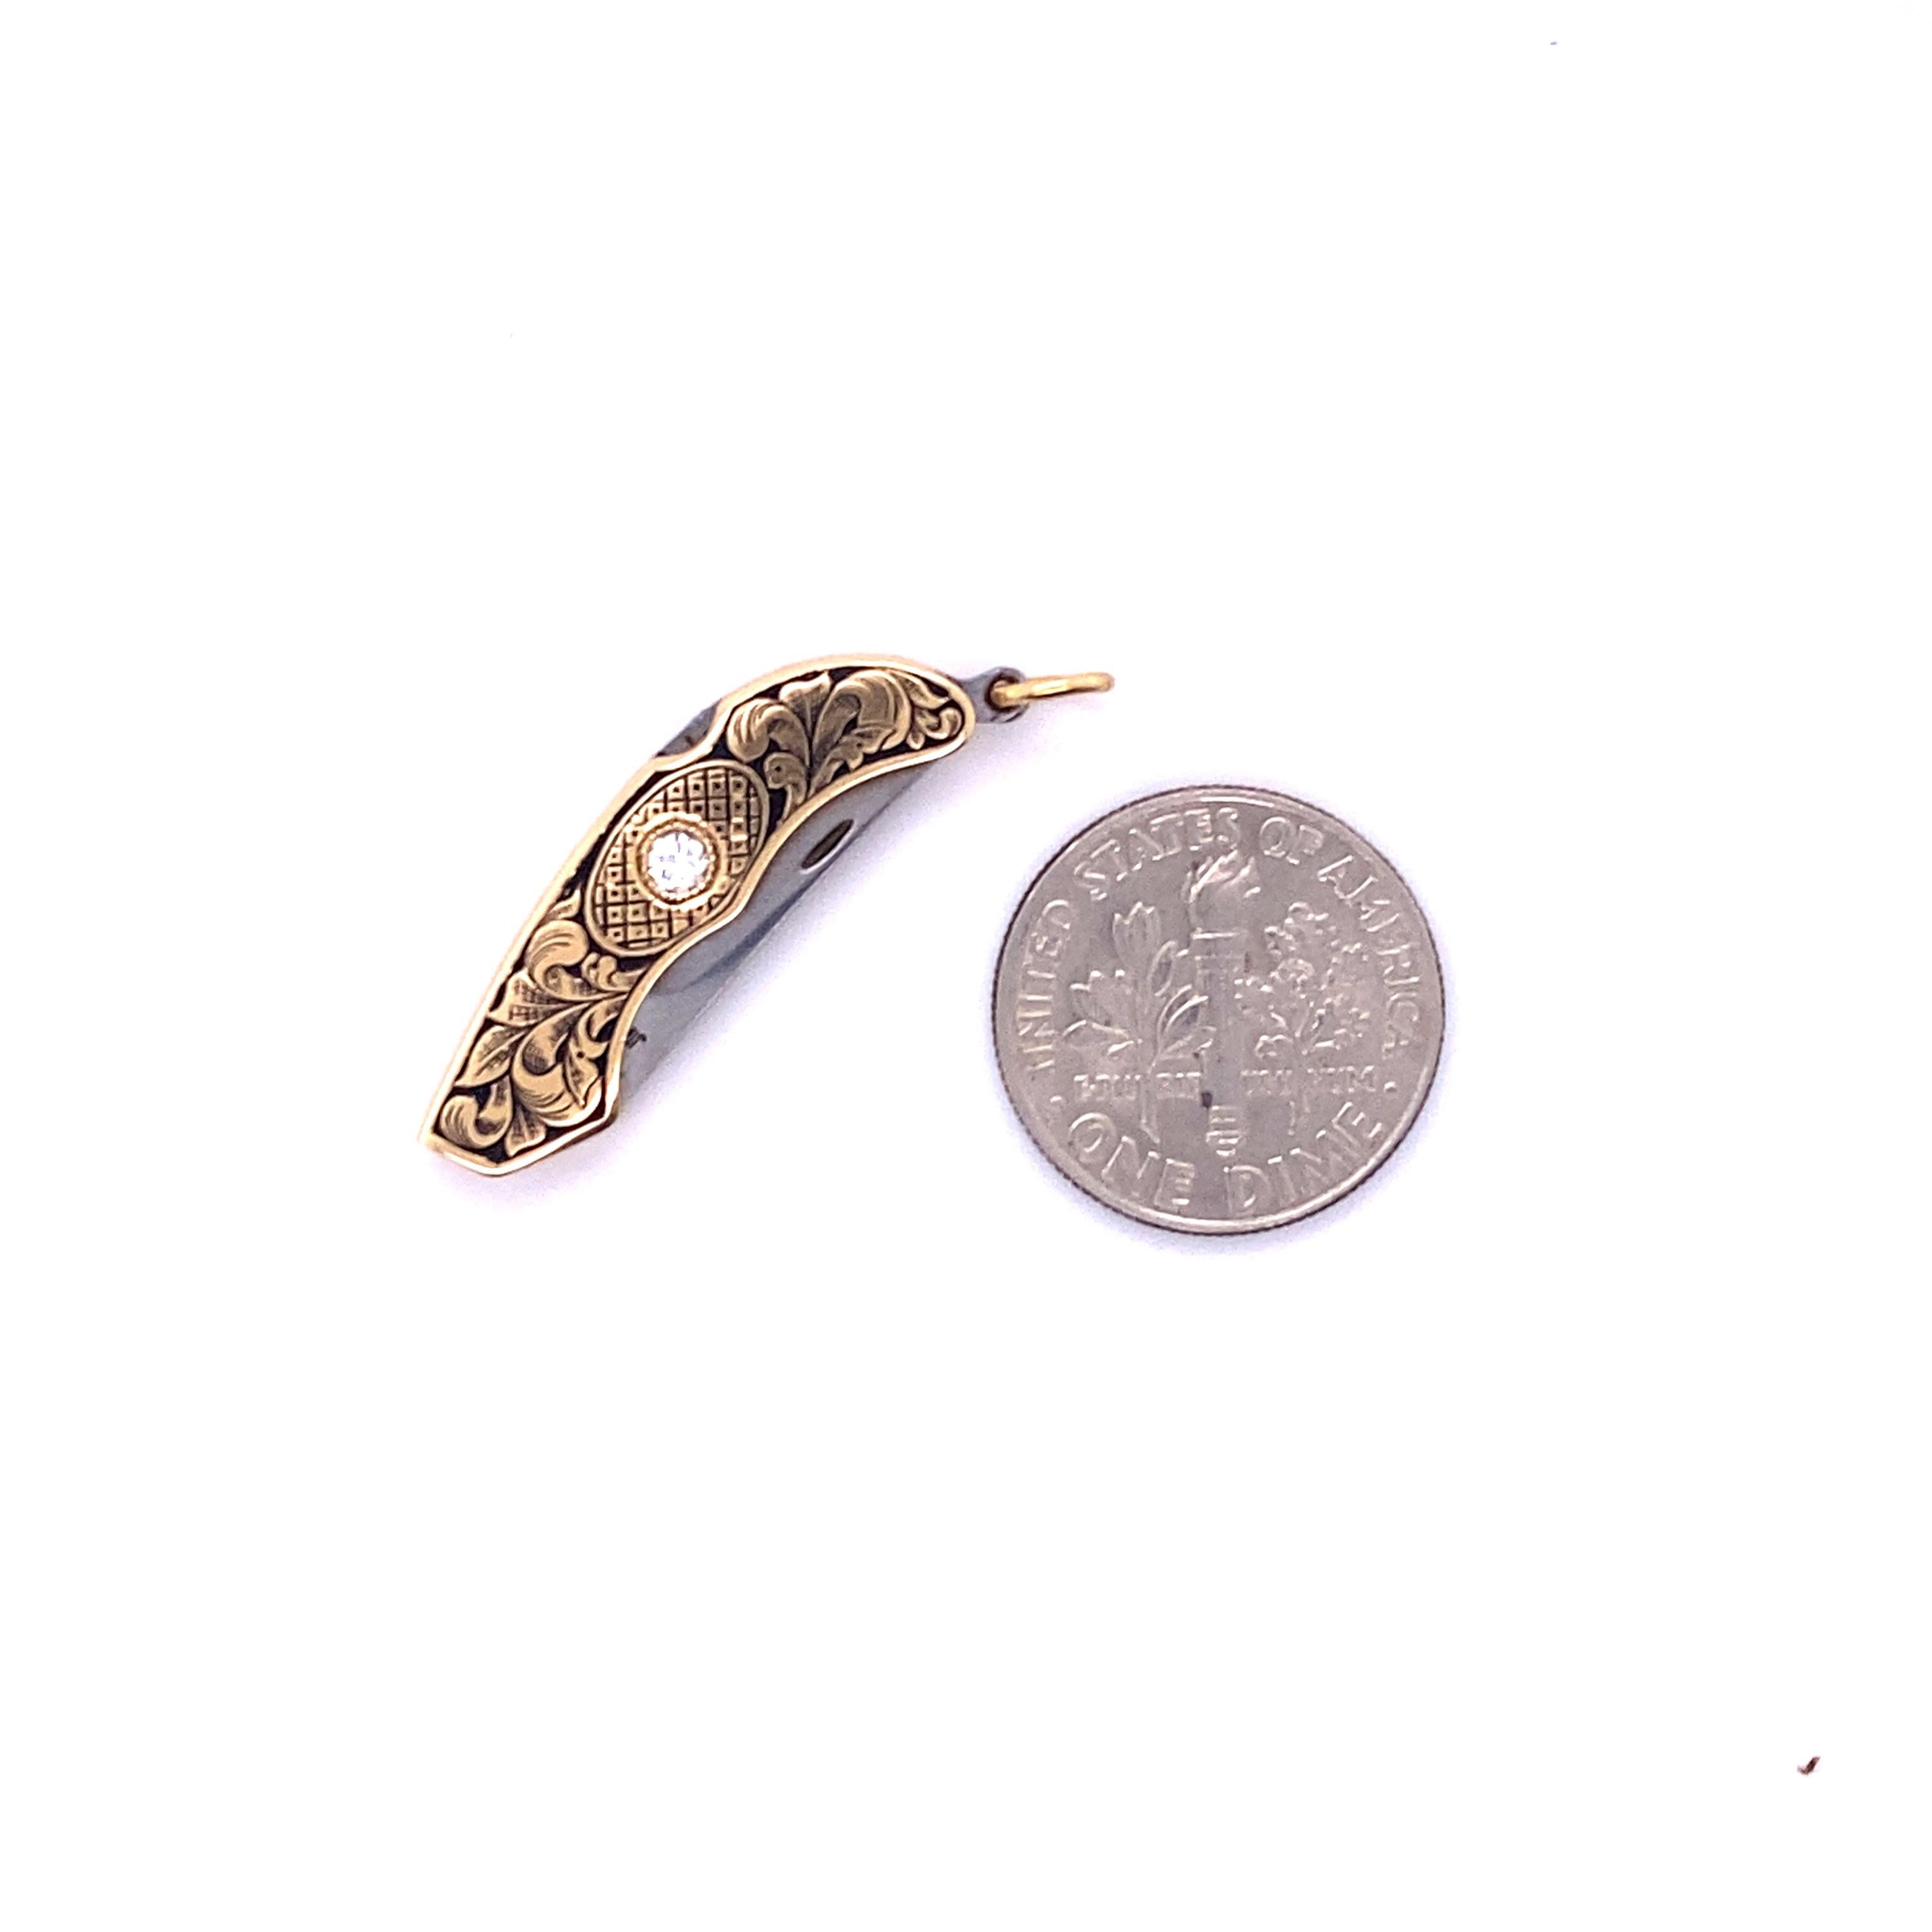 Rare Jim Martin Miniature 14K Gold Miniature Knife Necklace Pendant with Diamond 6